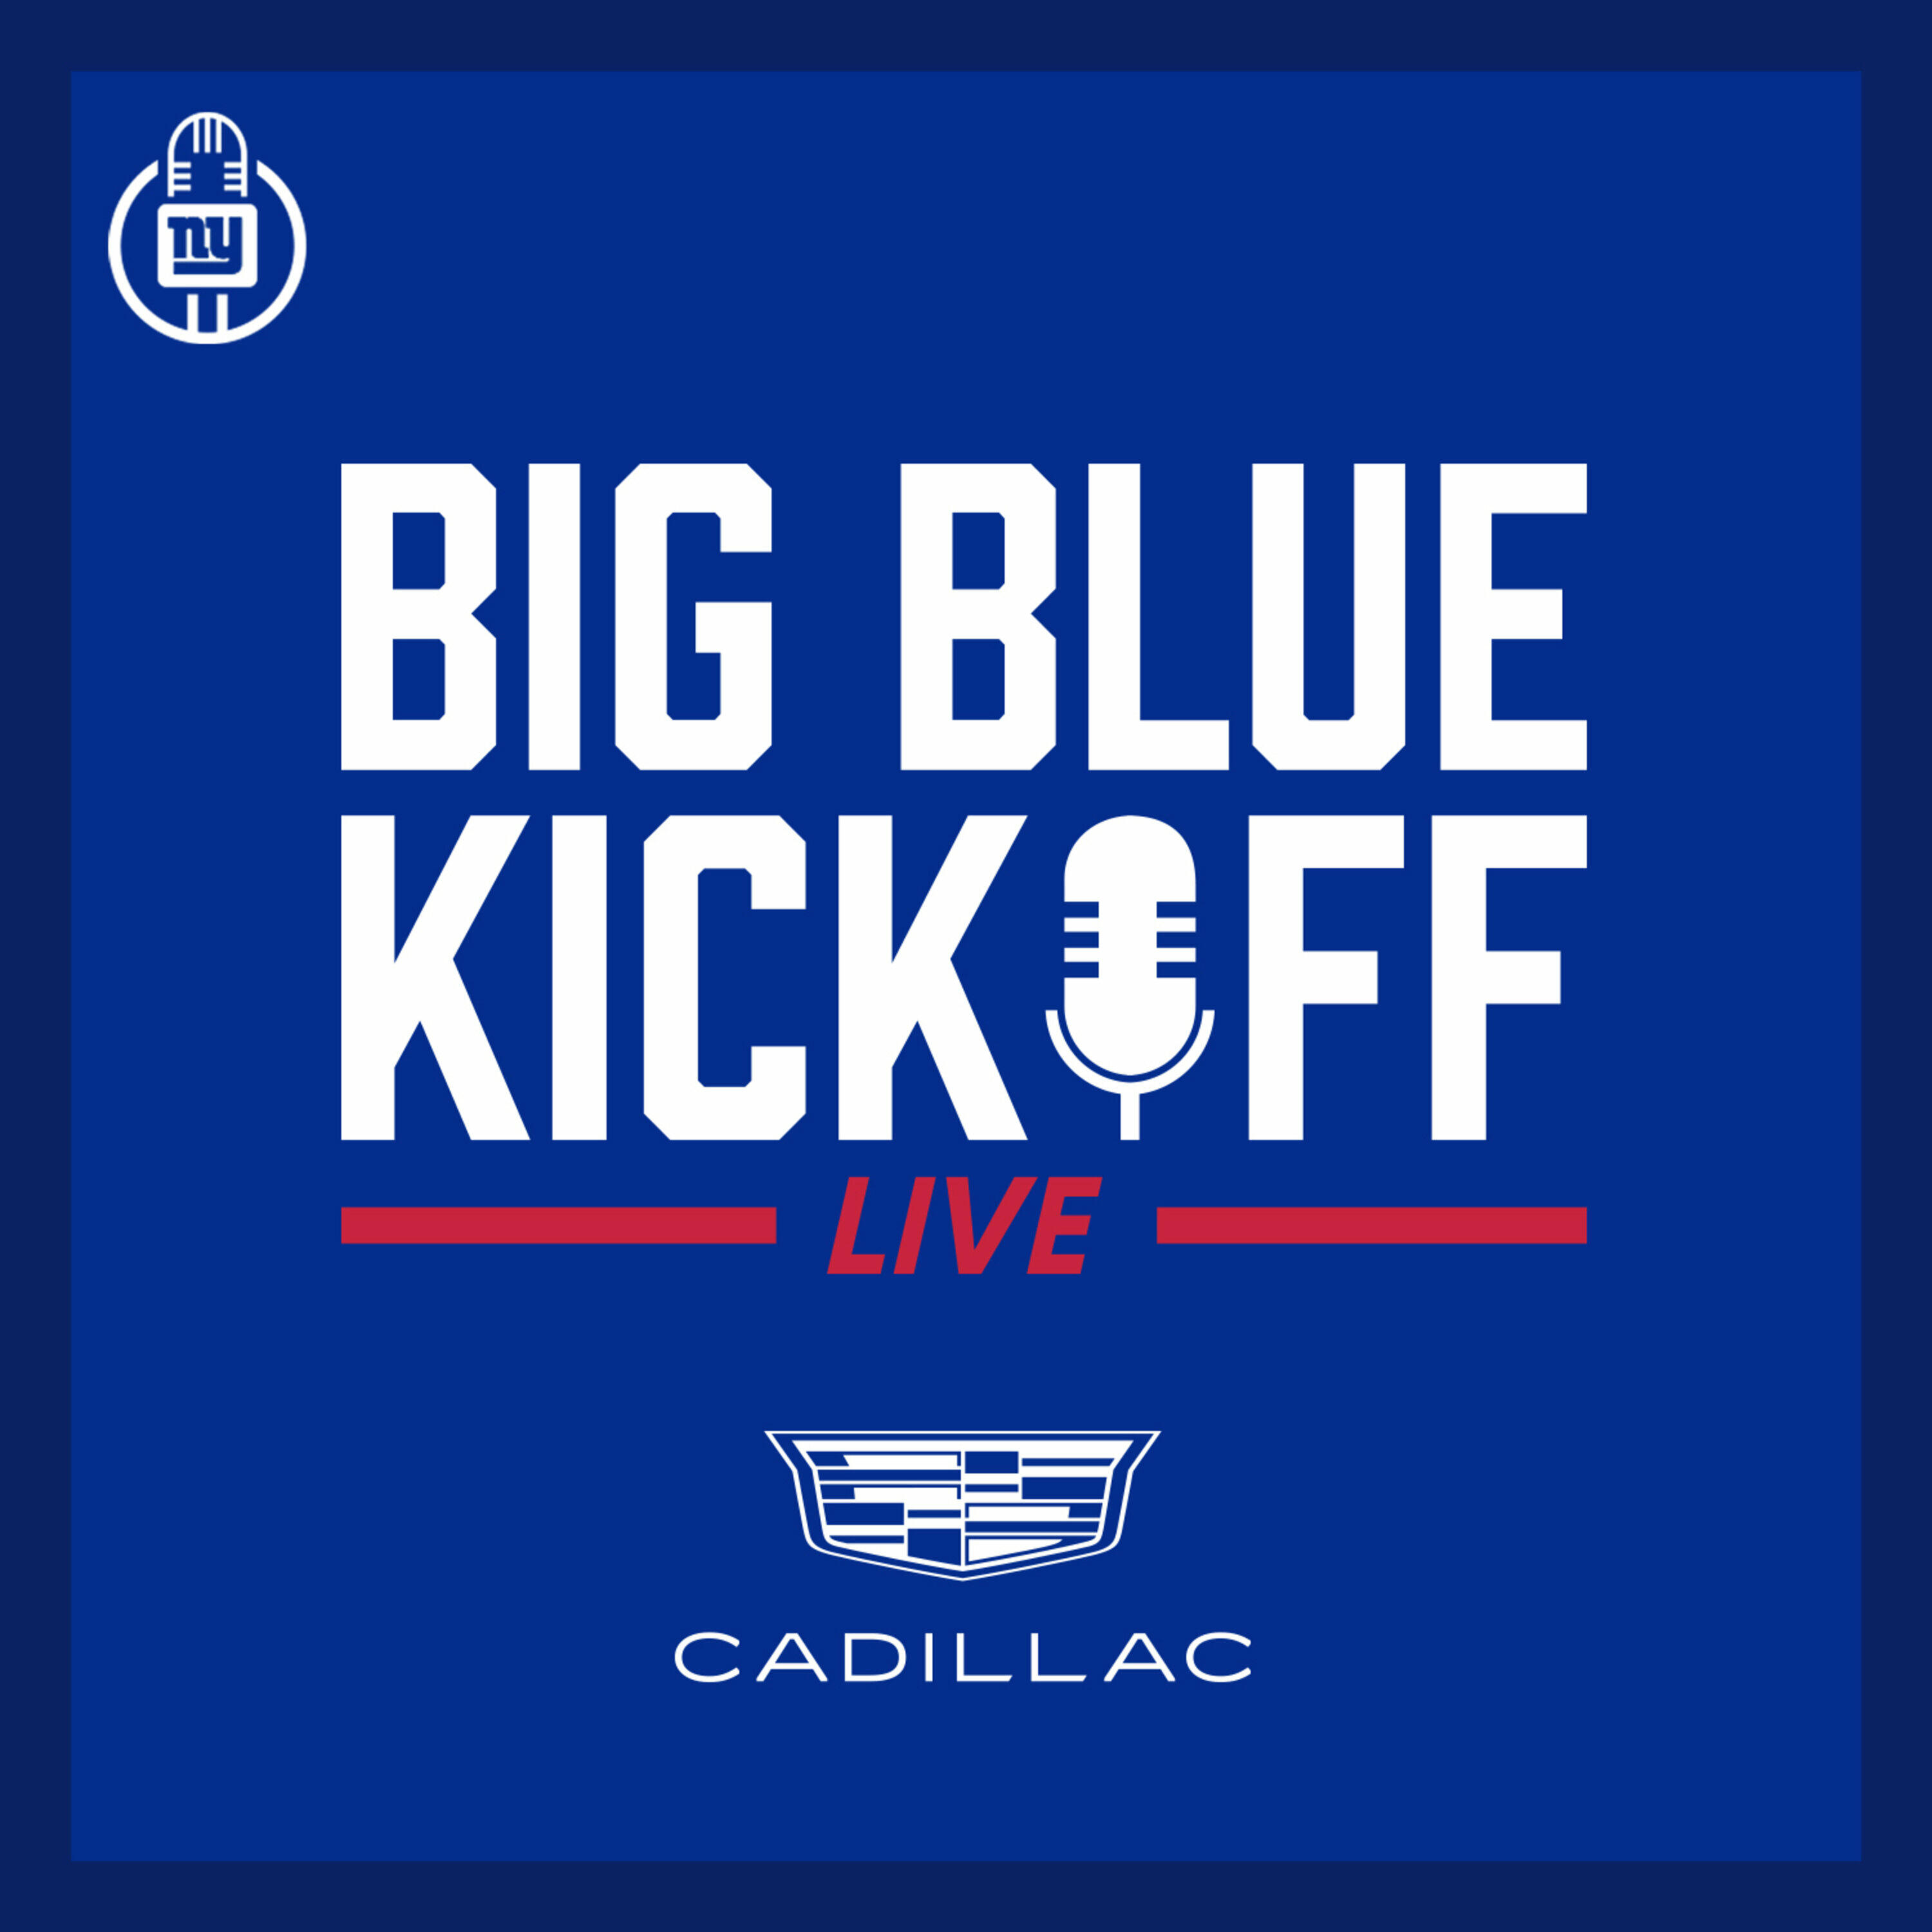 Big Blue Kickoff Live New York Giants iHeart